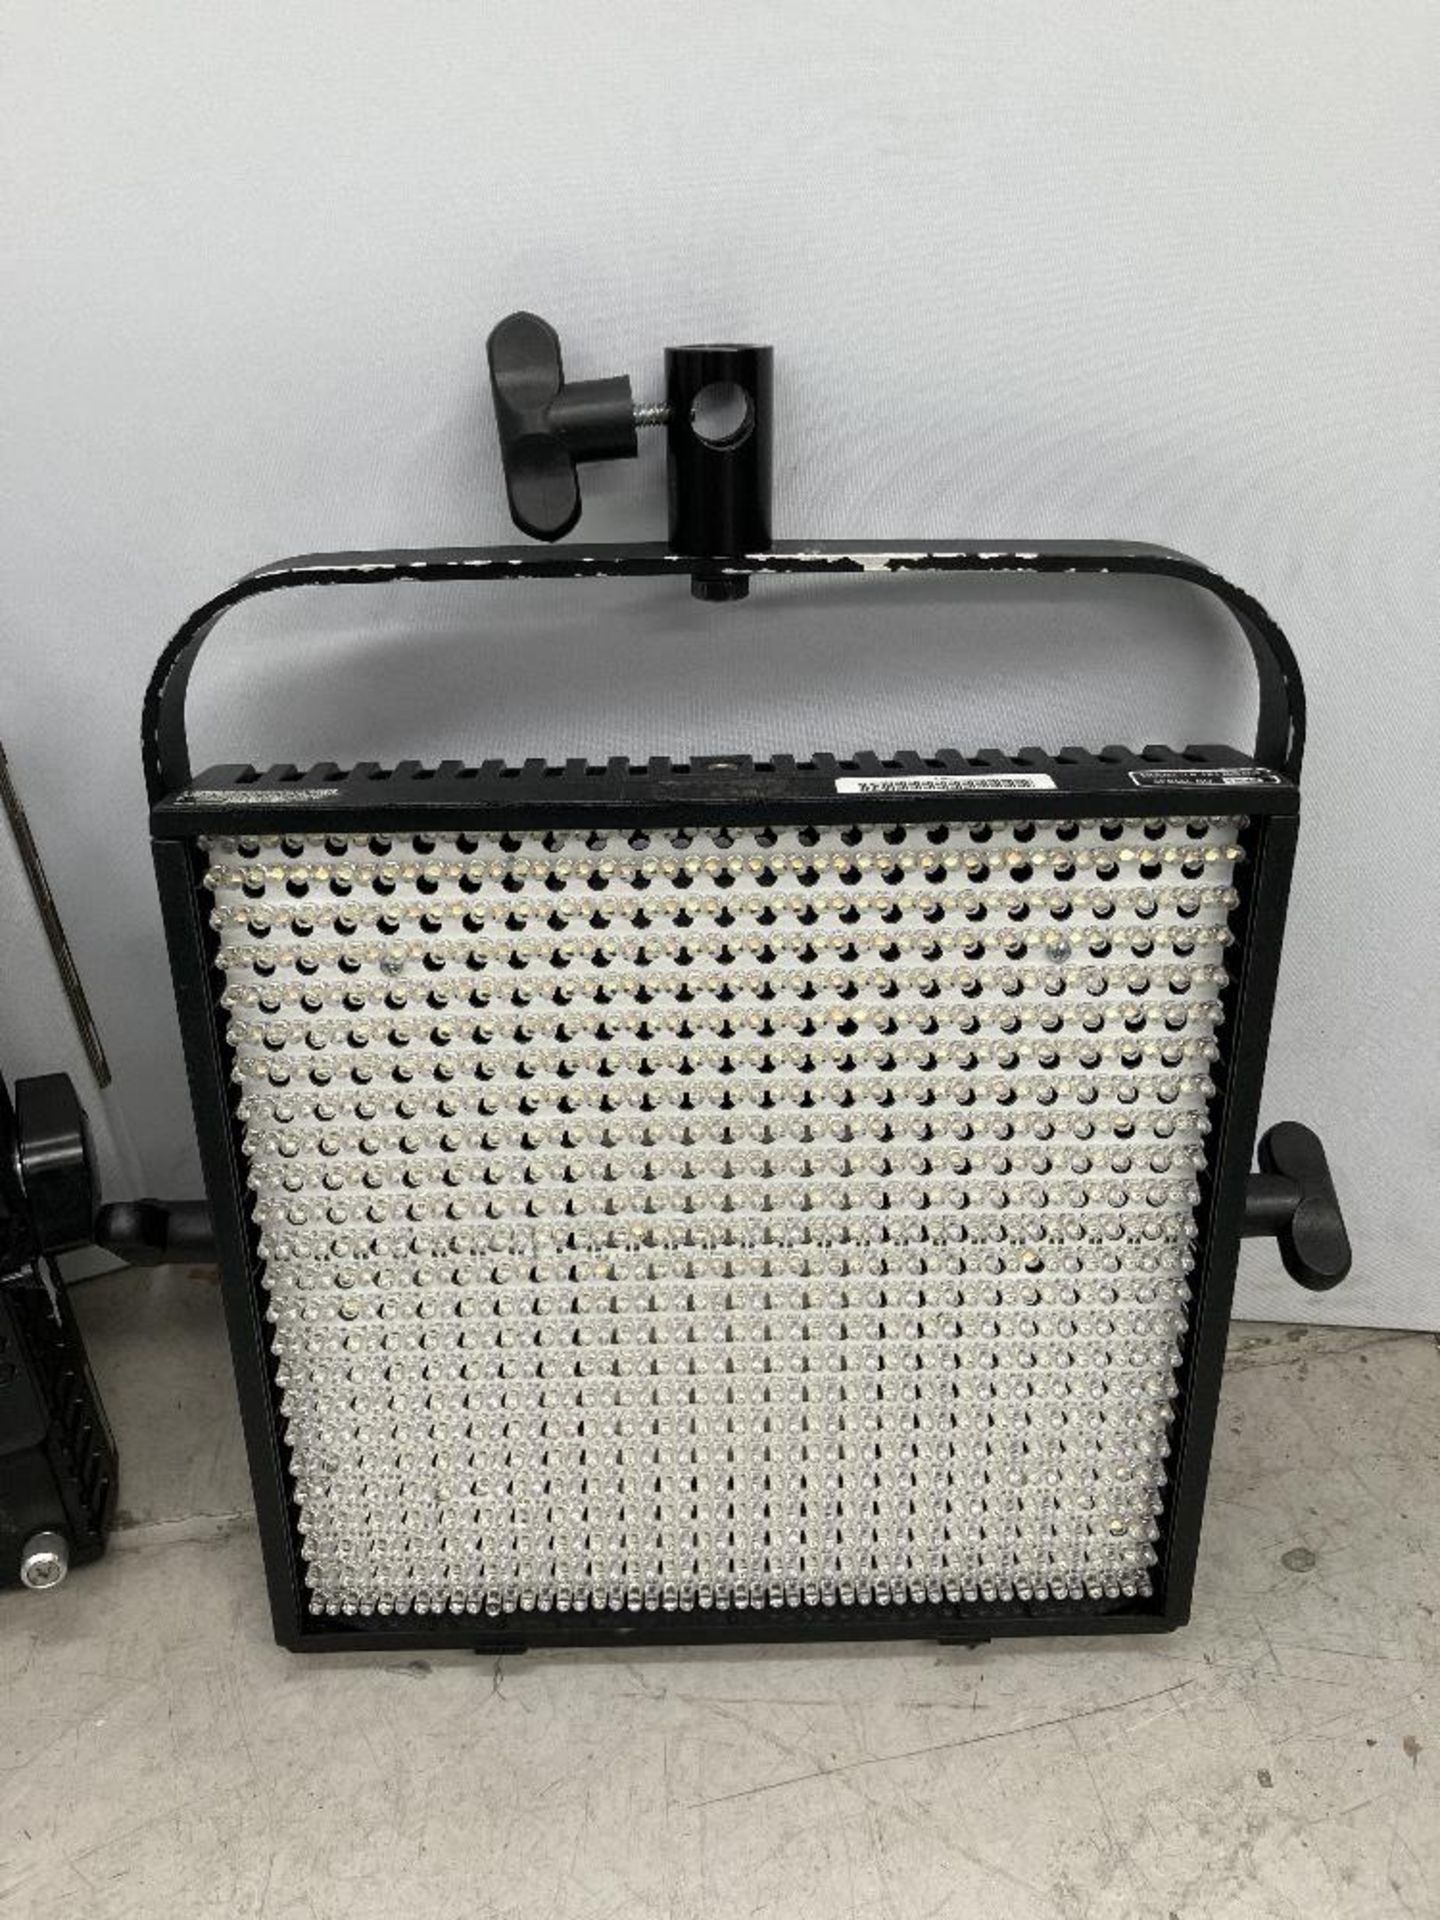 Litepanels 1X1 LED Panel Light kit - Image 4 of 5